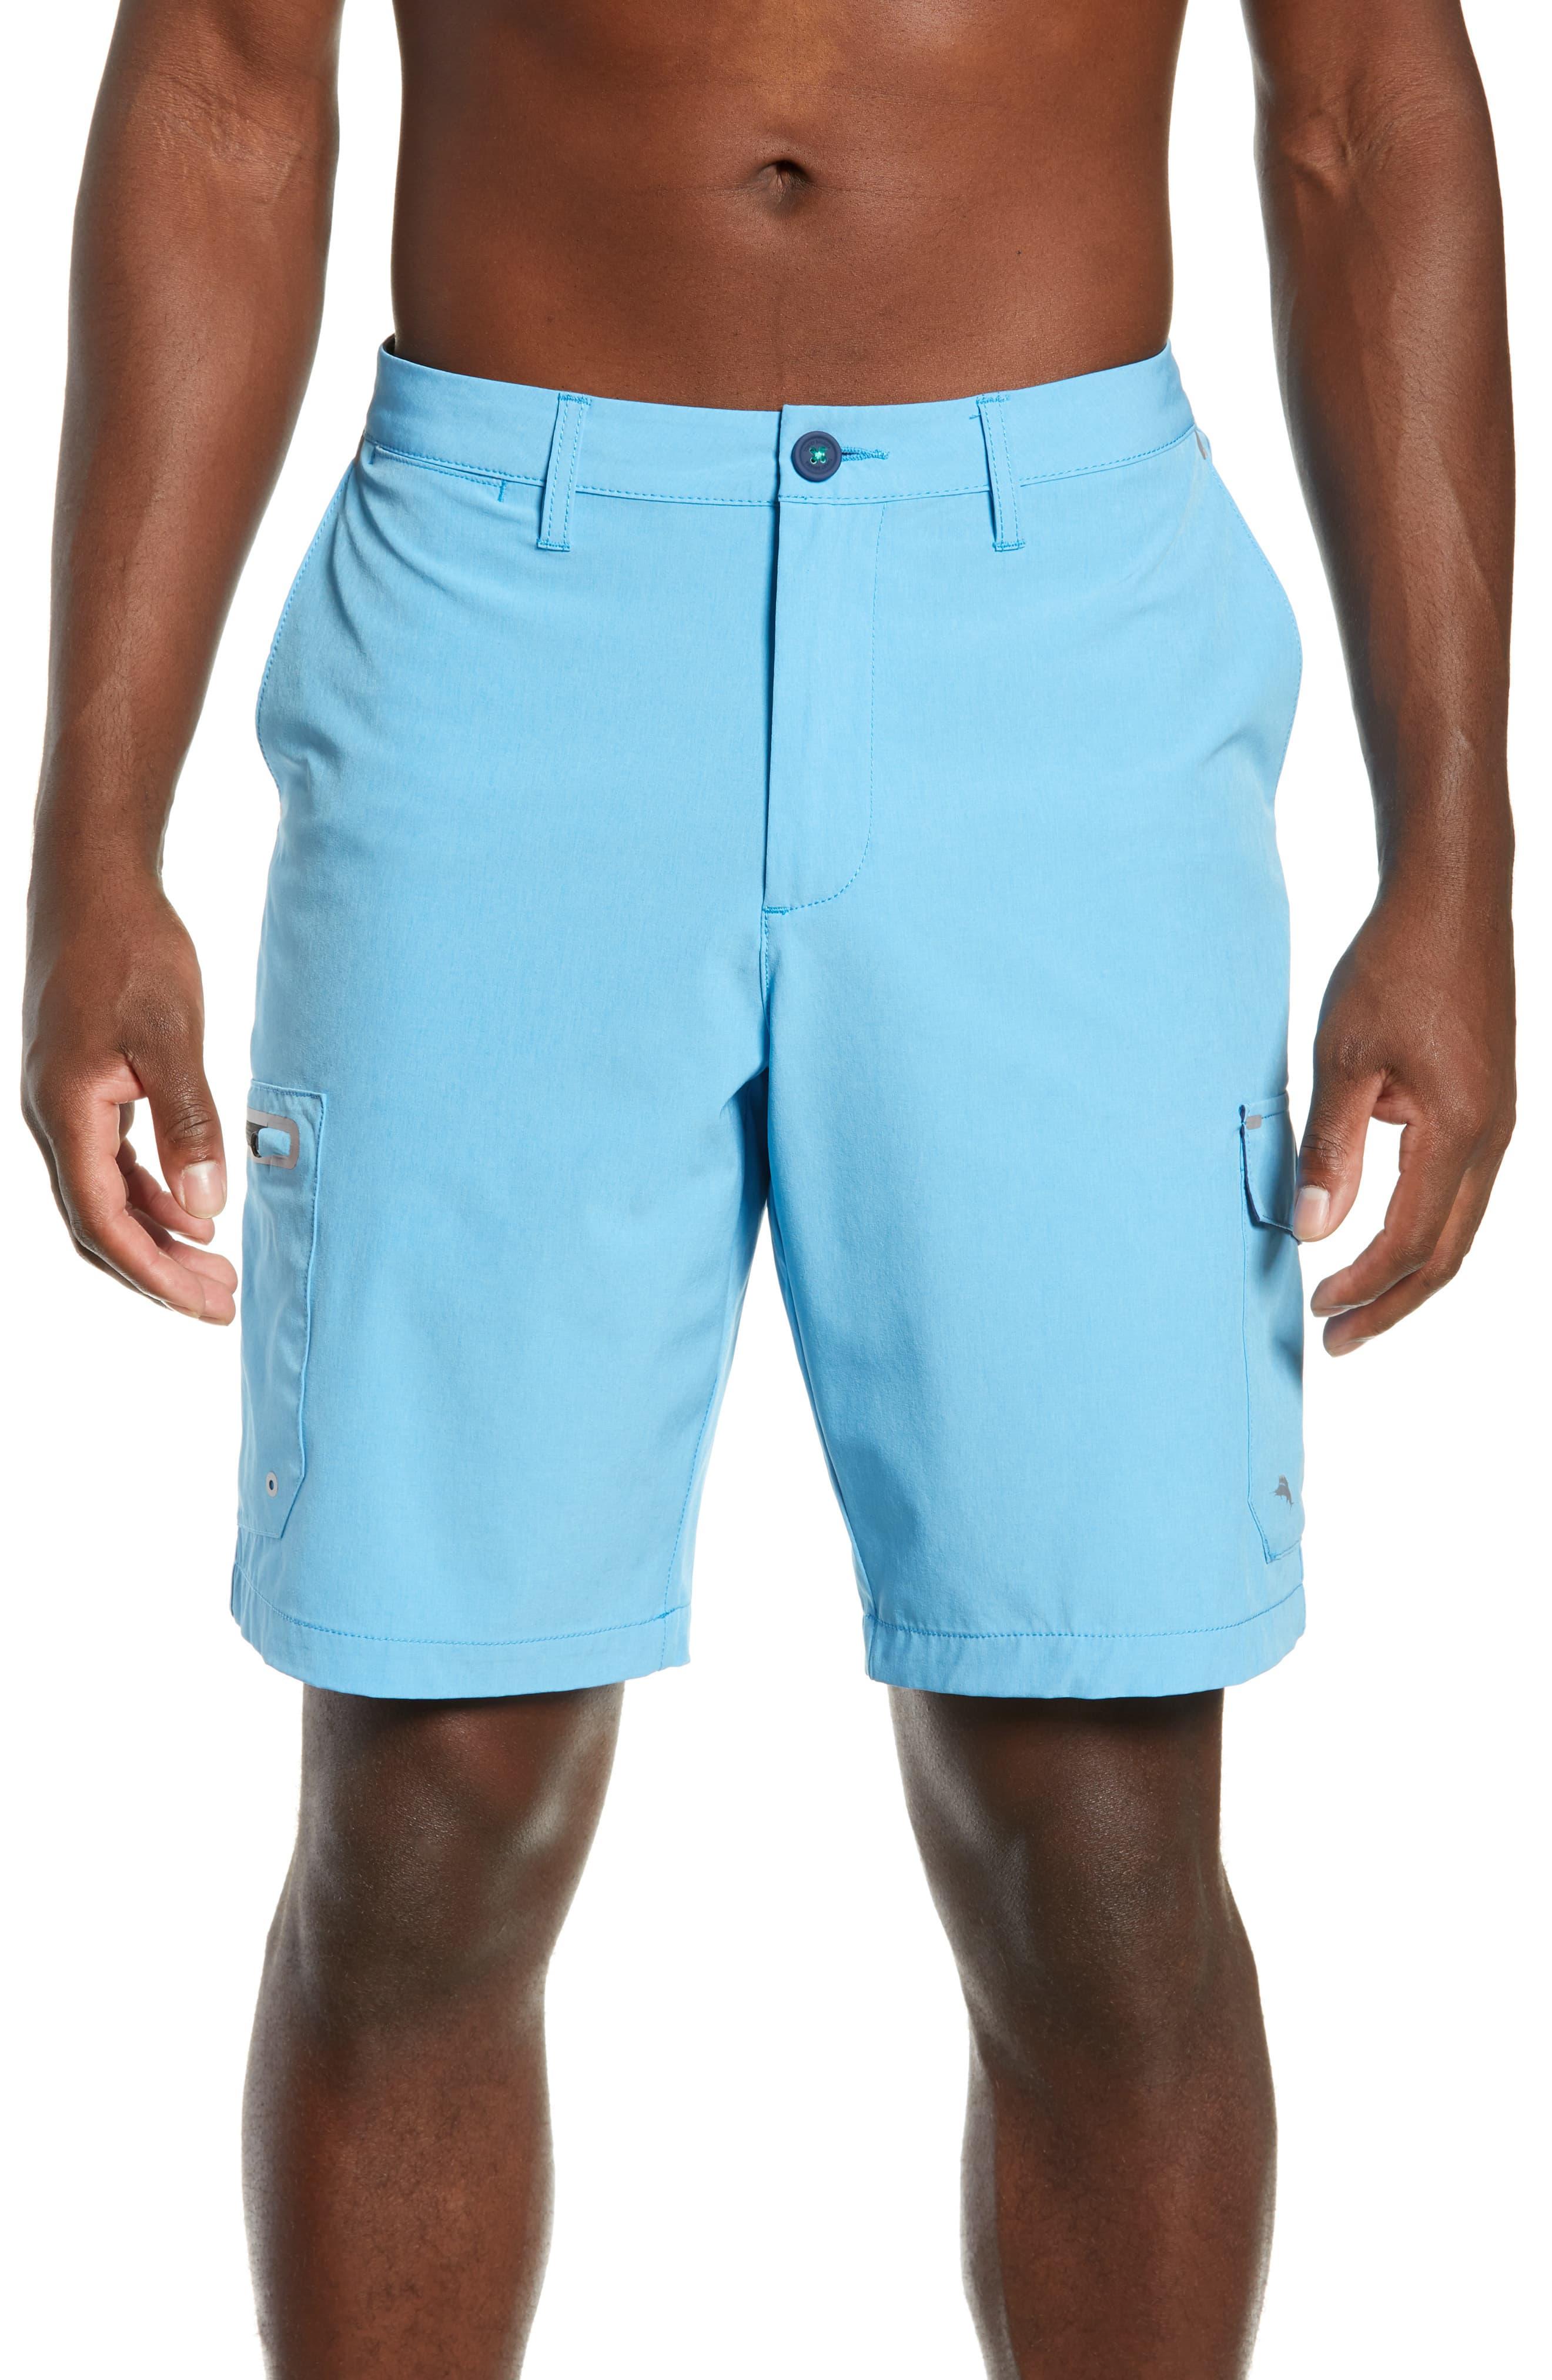 Tommy Bahama Cayman Isles Cargo Hybrid Board Shorts in Blue for Men - Lyst